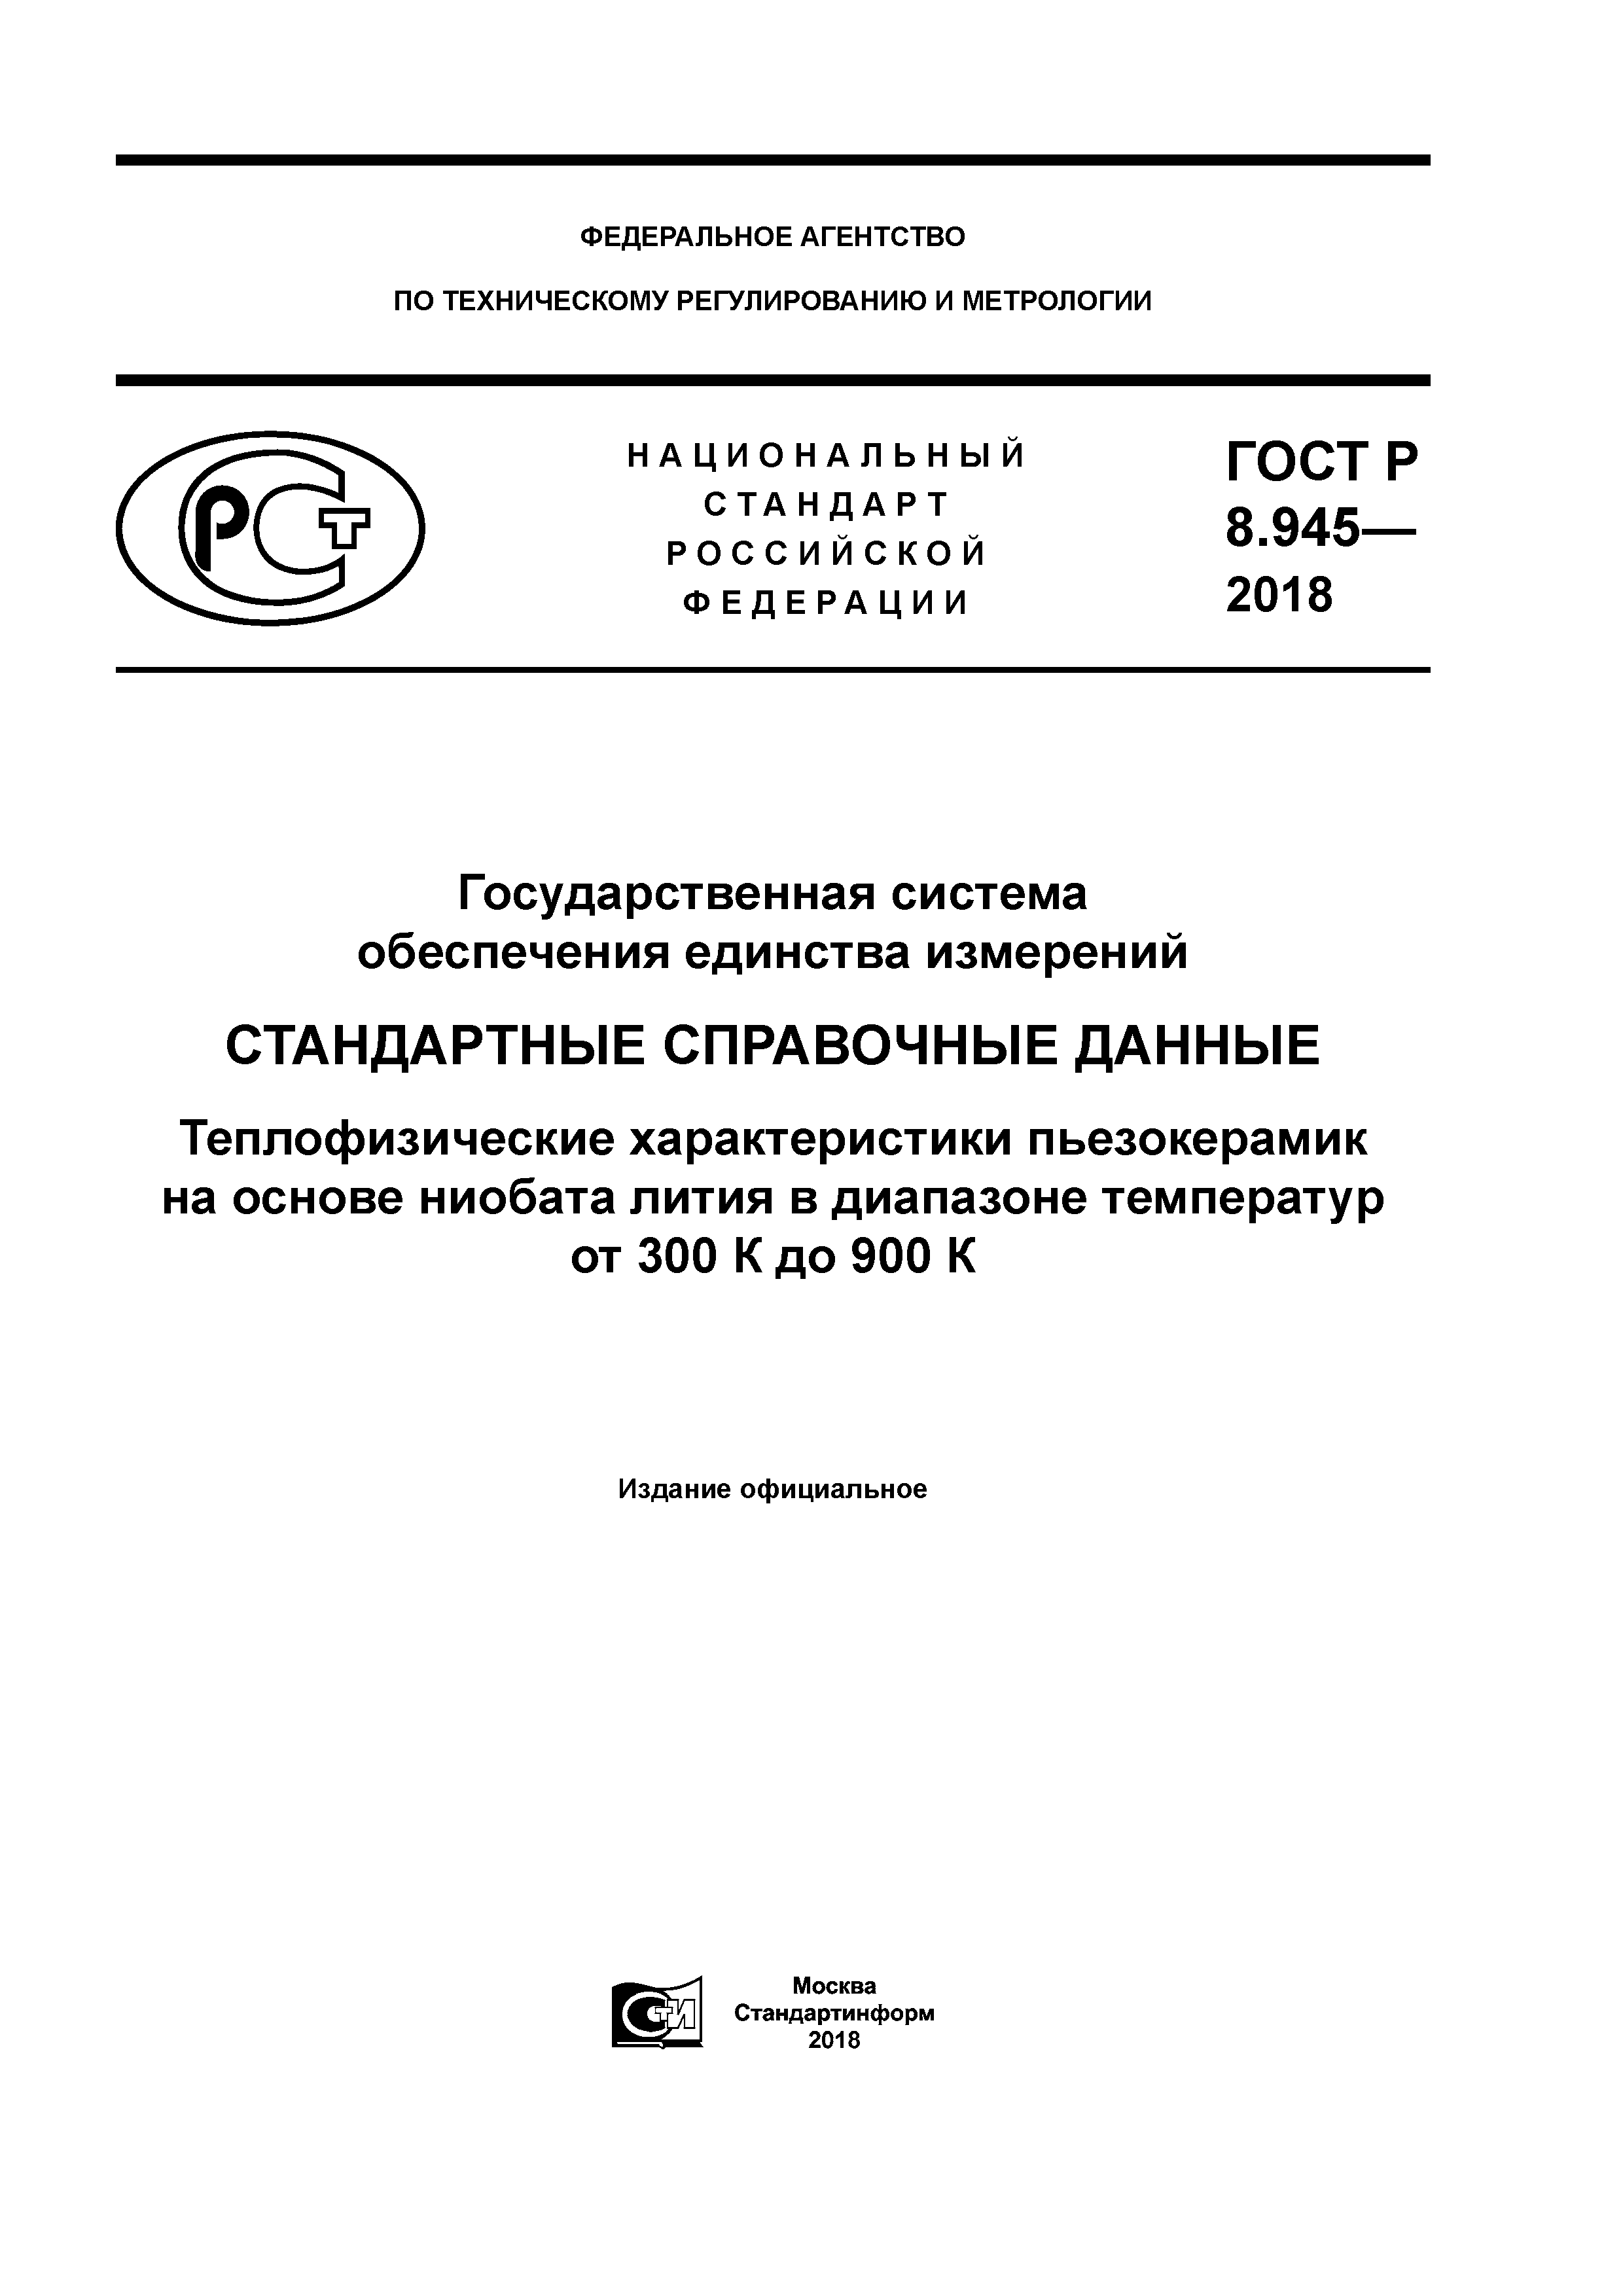 ГОСТ Р 8.945-2018